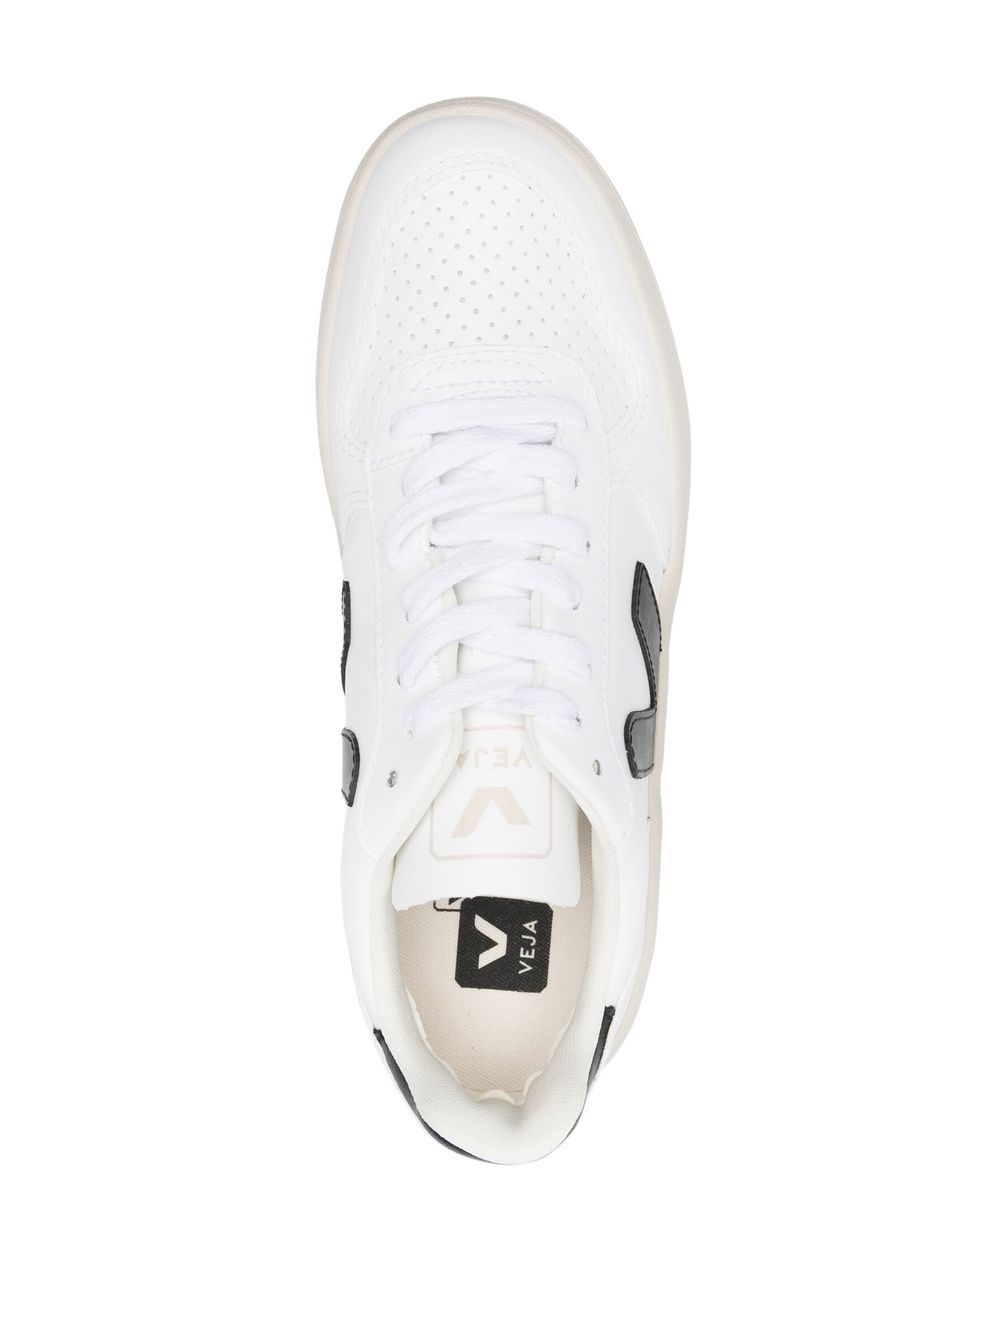 sneaker urca bianca con logo nero